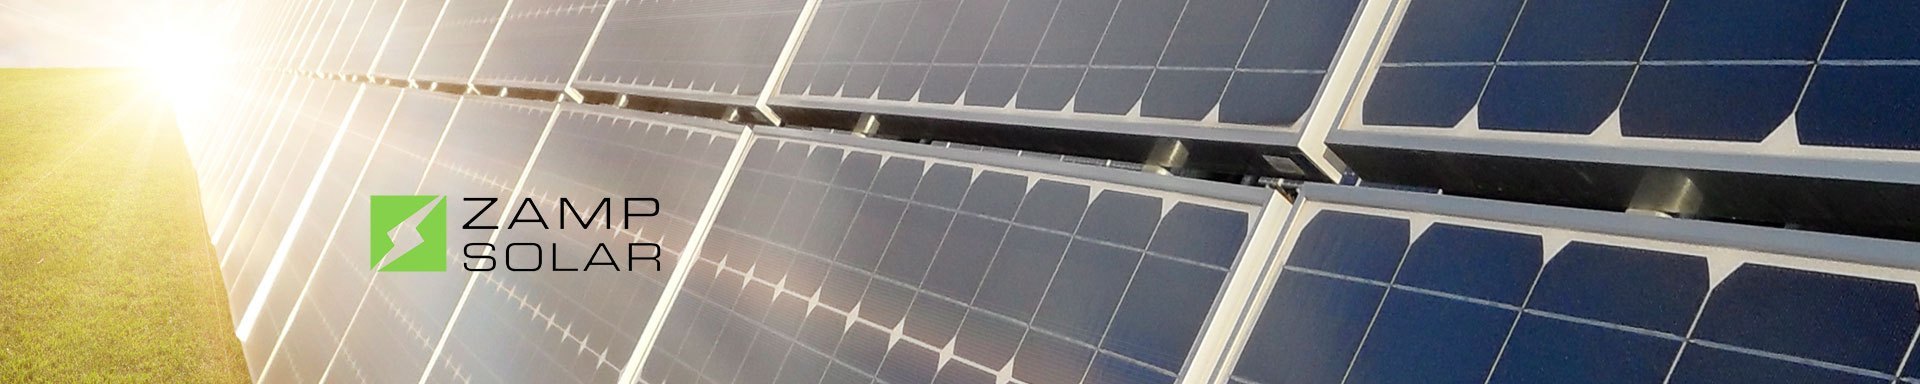 Solar Zamp Solar